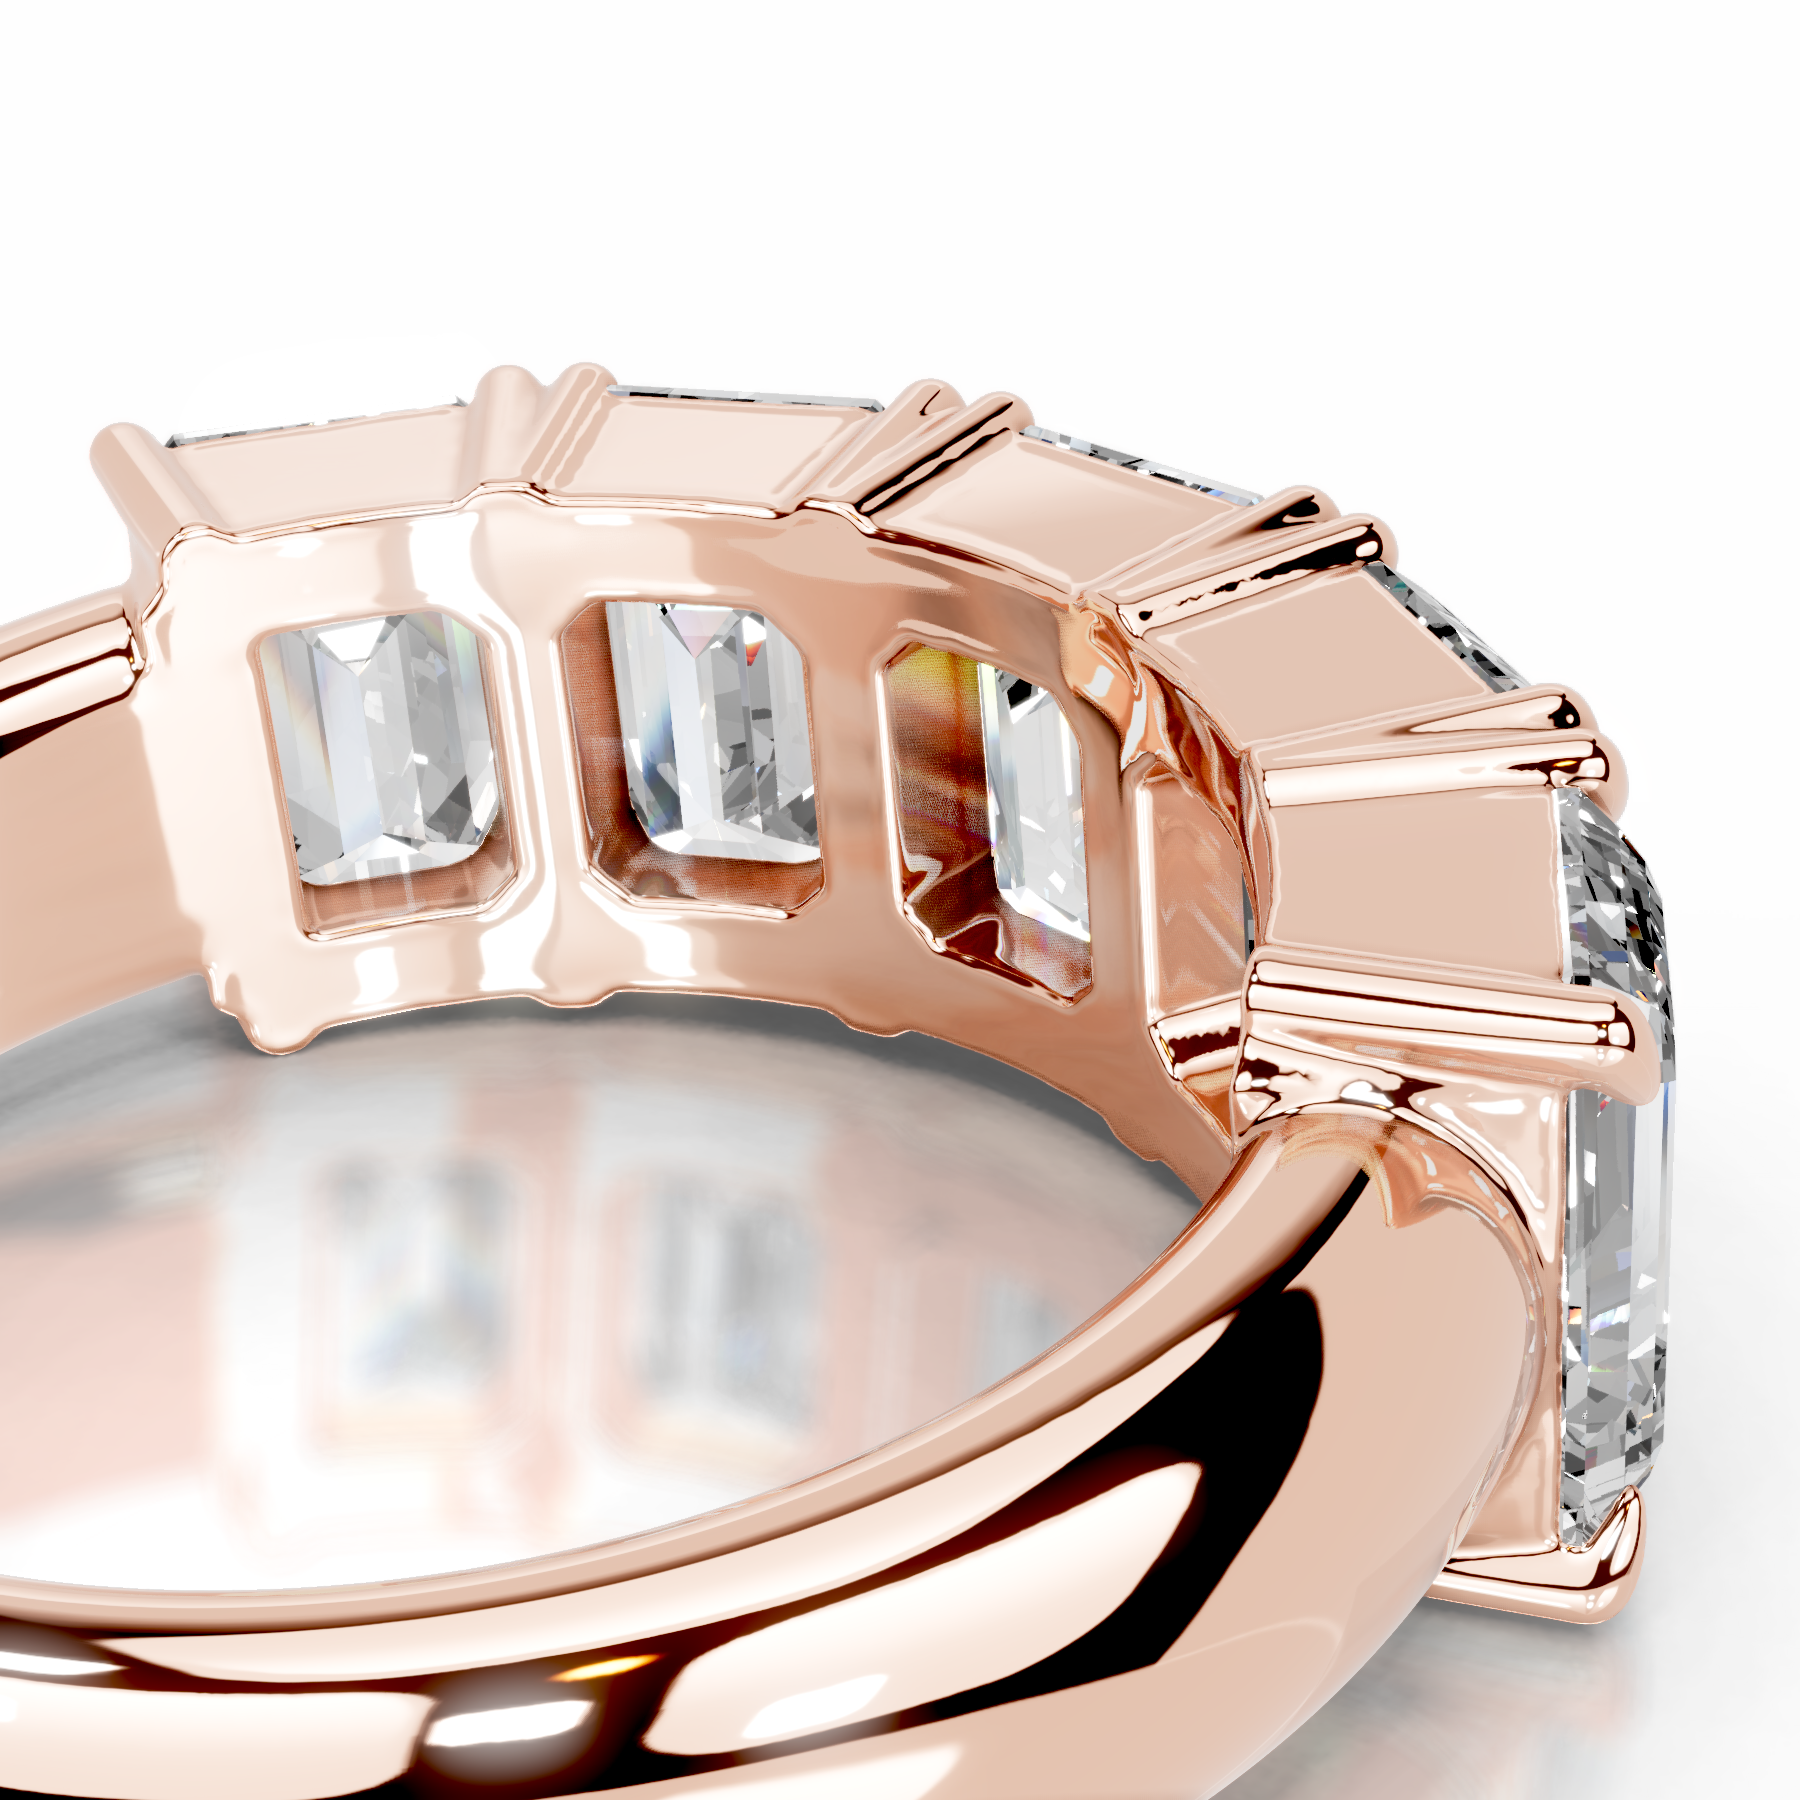 Shandra Diamond Wedding Ring   (2.5 Carat) -14K Rose Gold